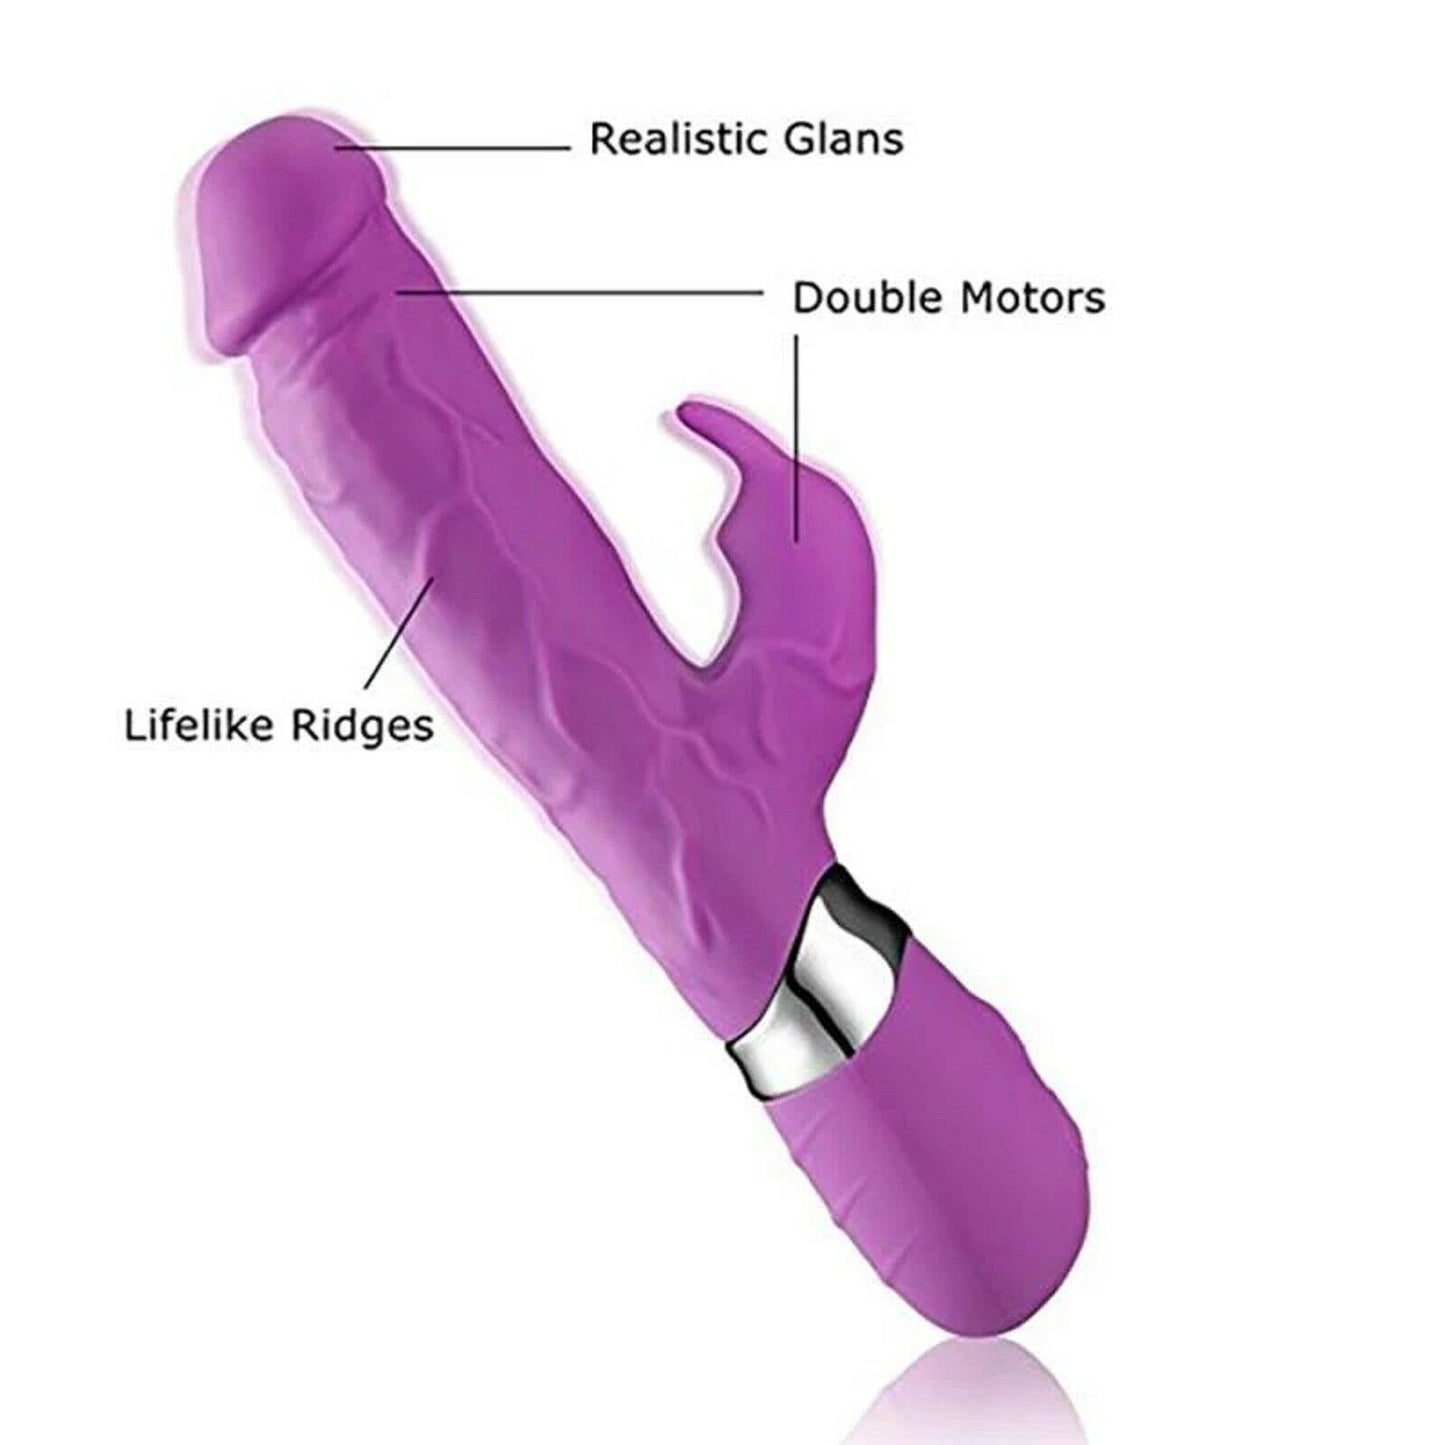 9" Large Rabbit Vibrator Big Realistic Dildo Clit USB Rechargeable Wand Sex Toy